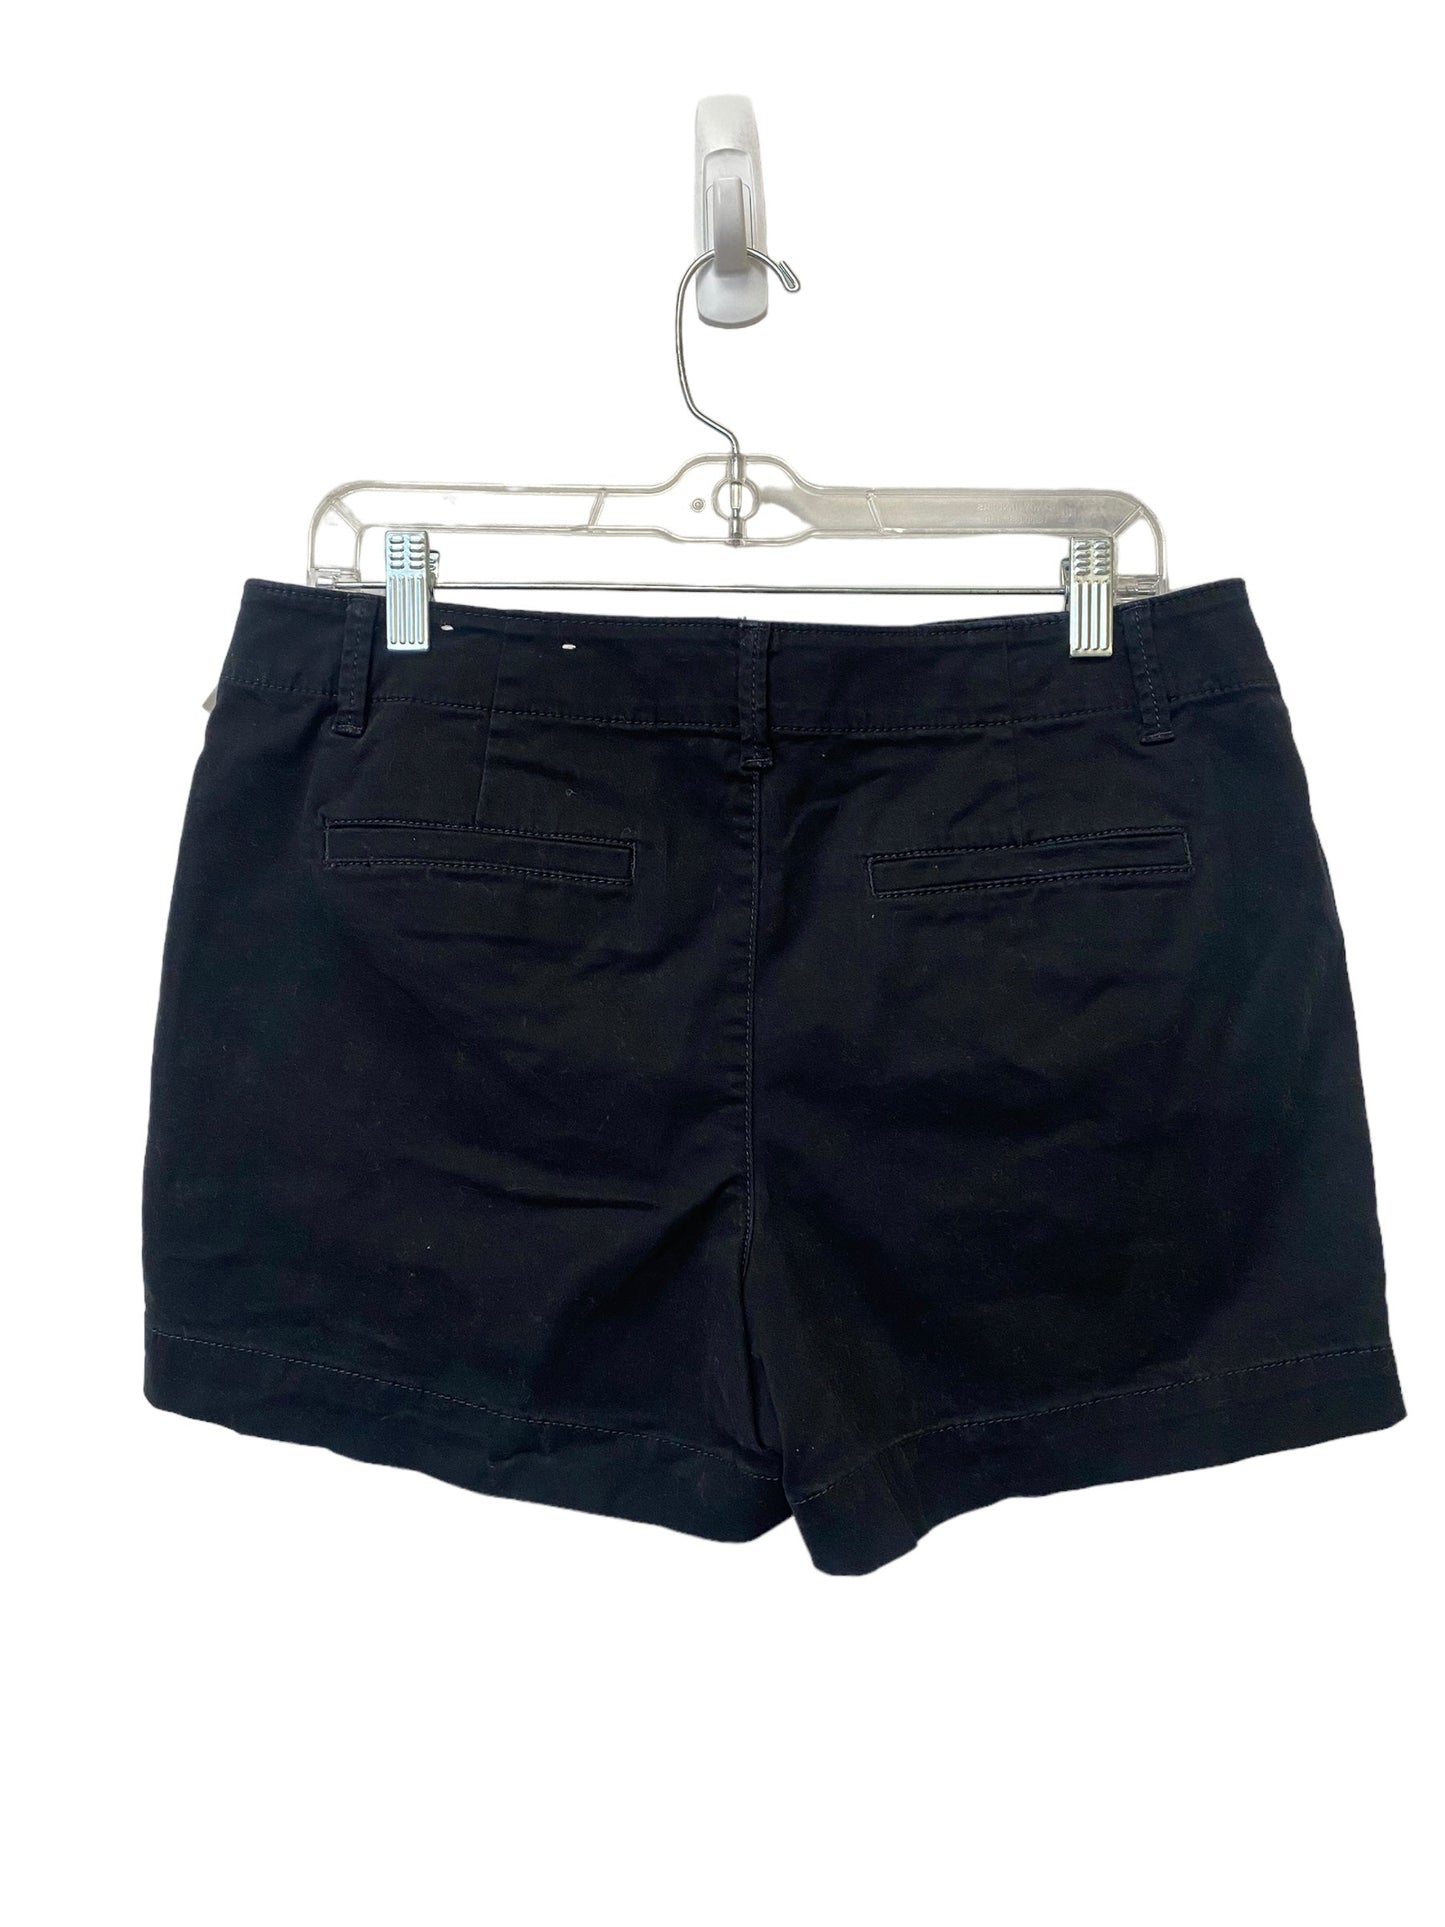 Black Shorts Loft, Size 10